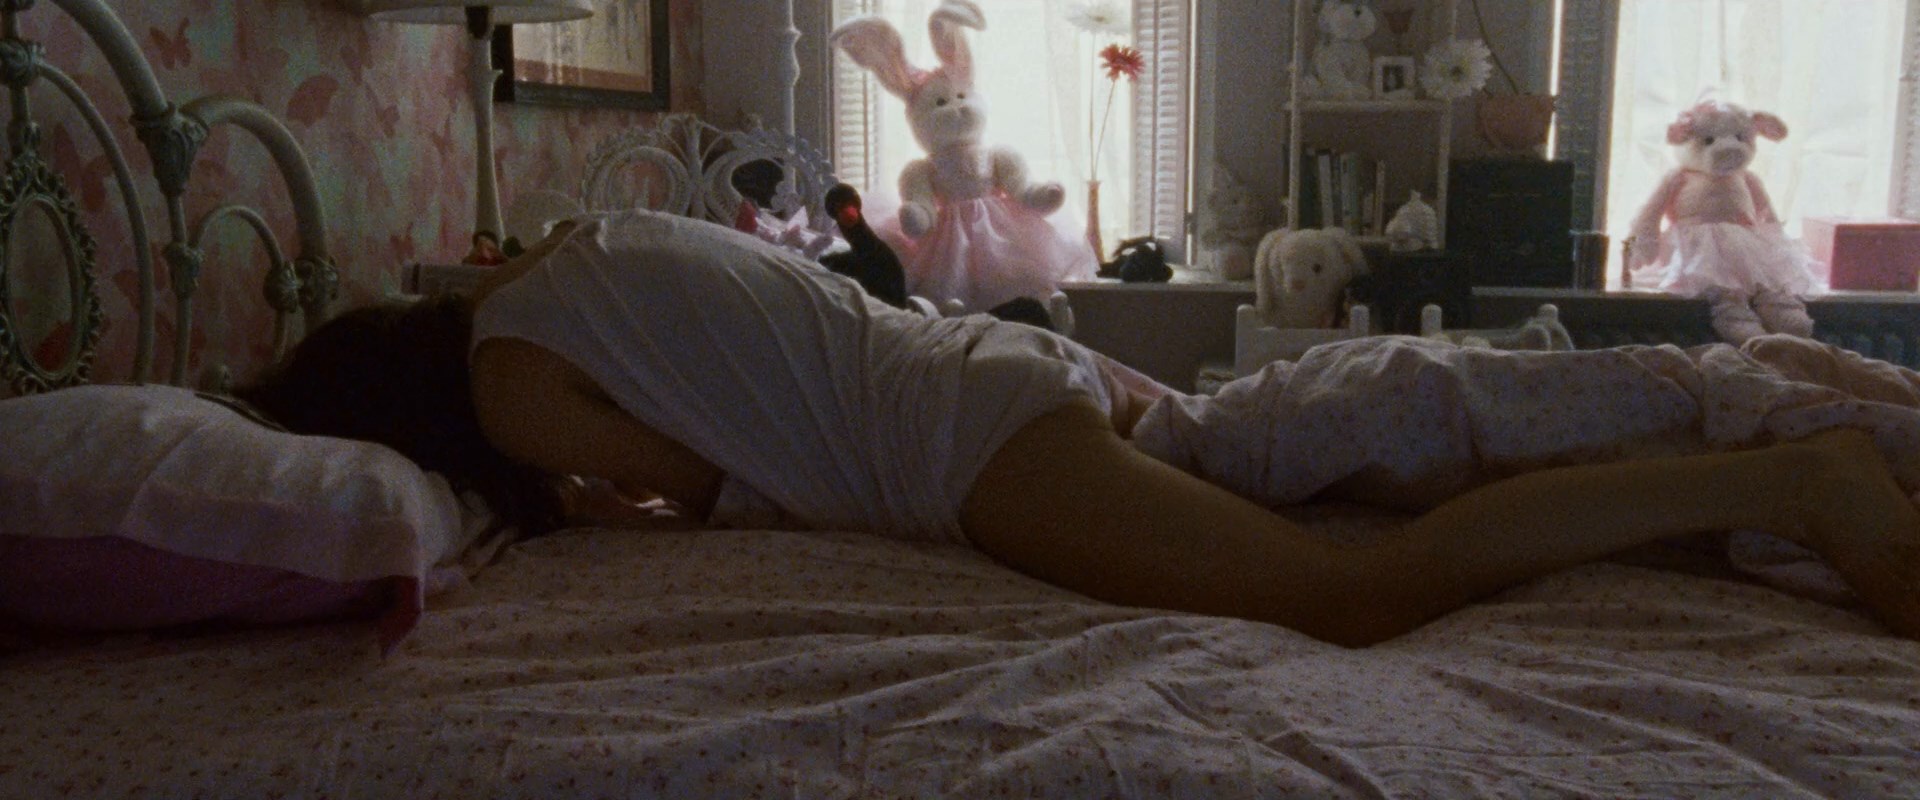 Natalie Portman, Mila Kunis - Black Swan - 1080p.